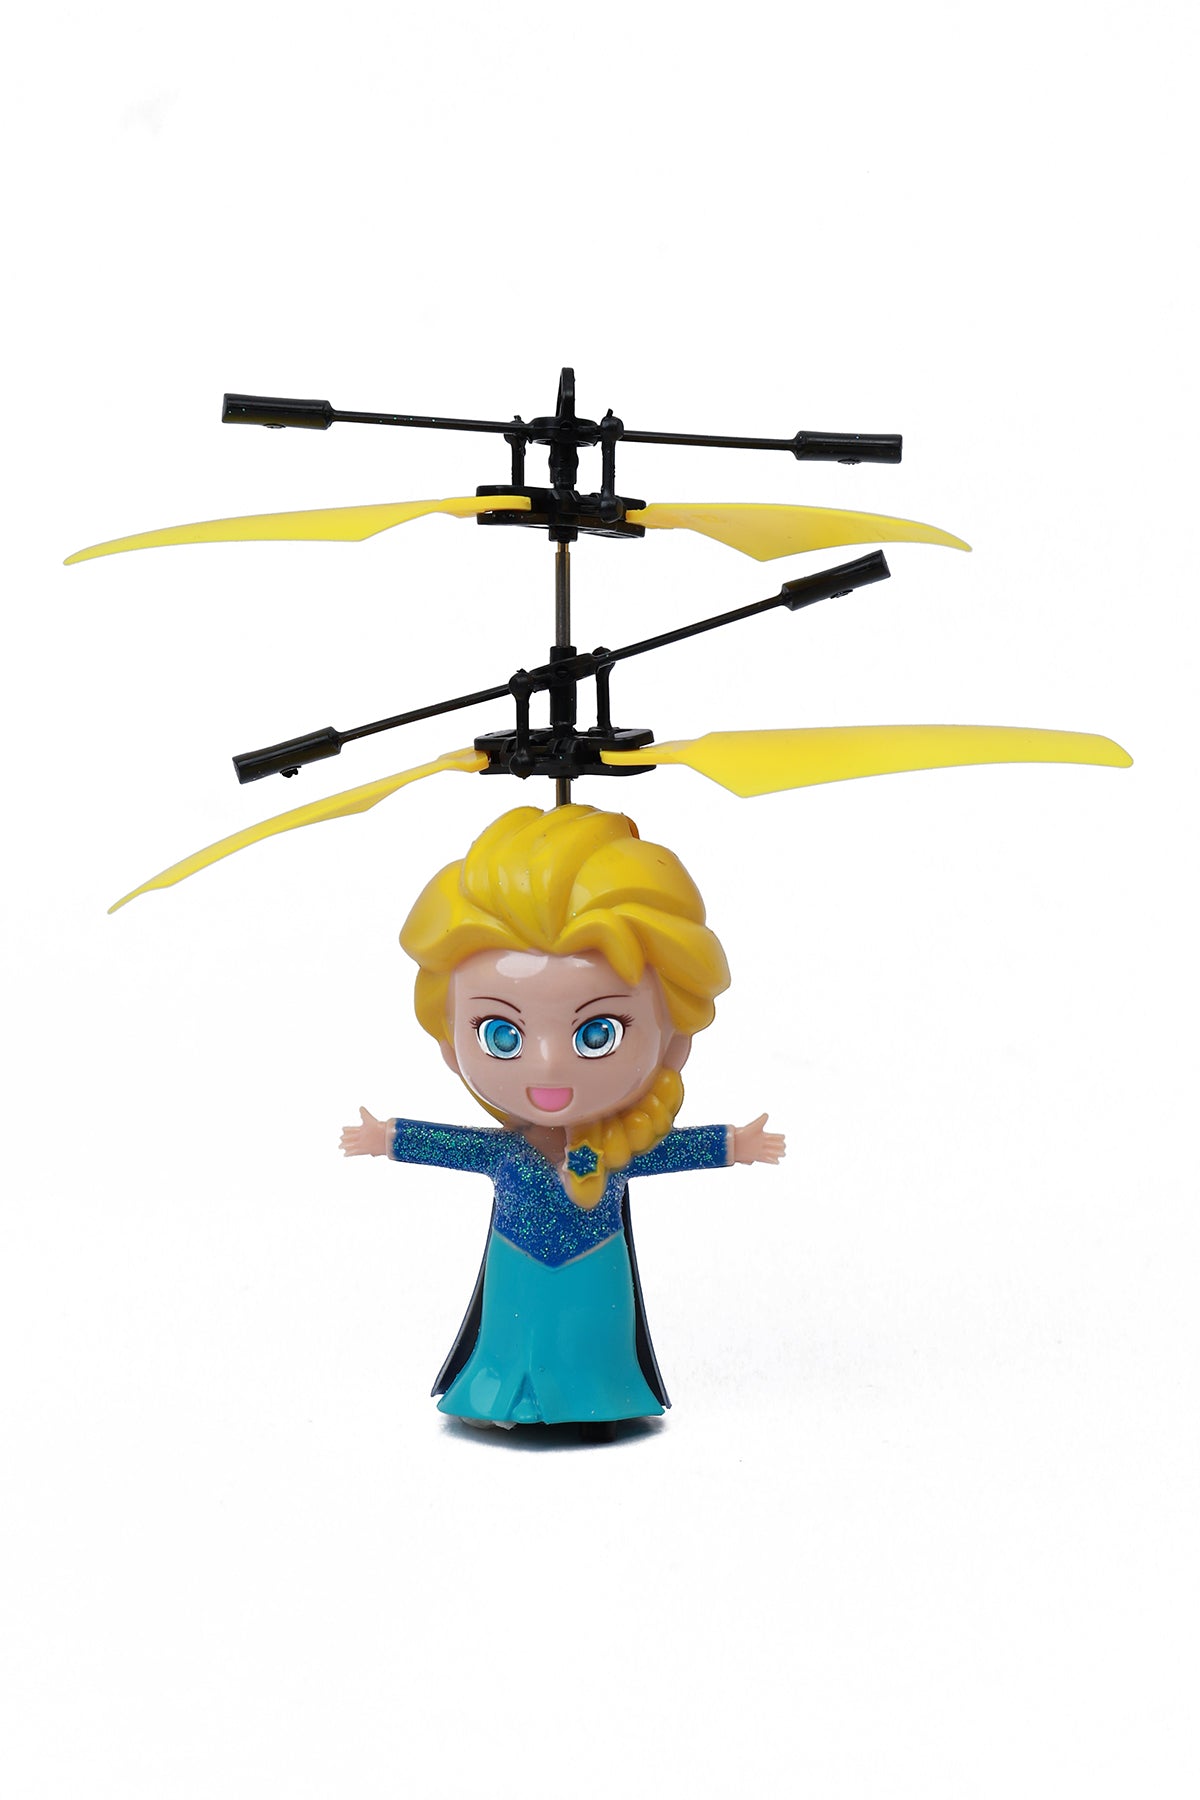 Remote Sensing Snow White Aerocraft Flying Toy